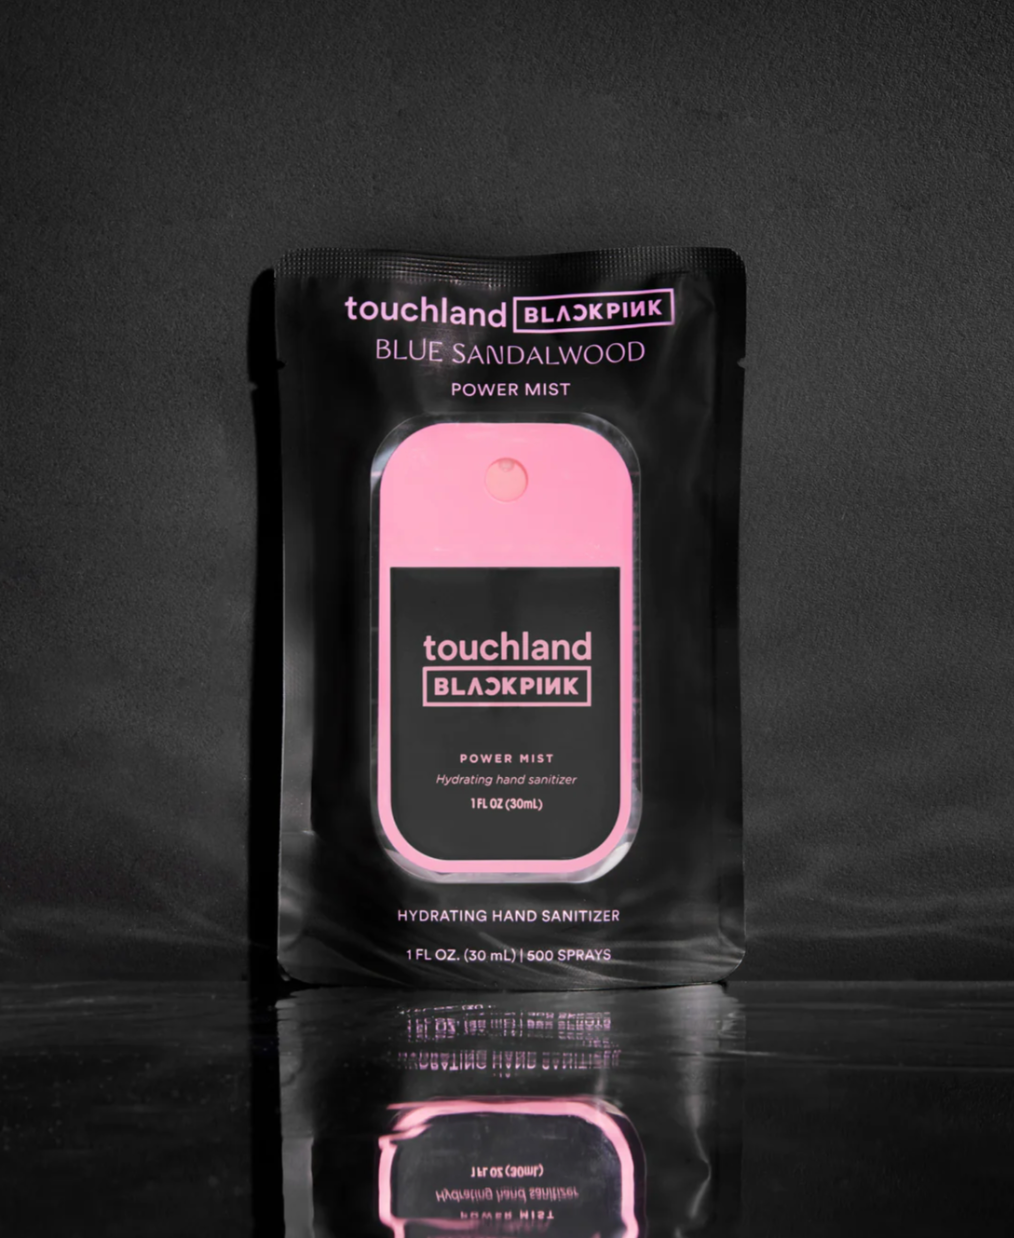 touchland power mist - blackpink collab (blue sandalwood)